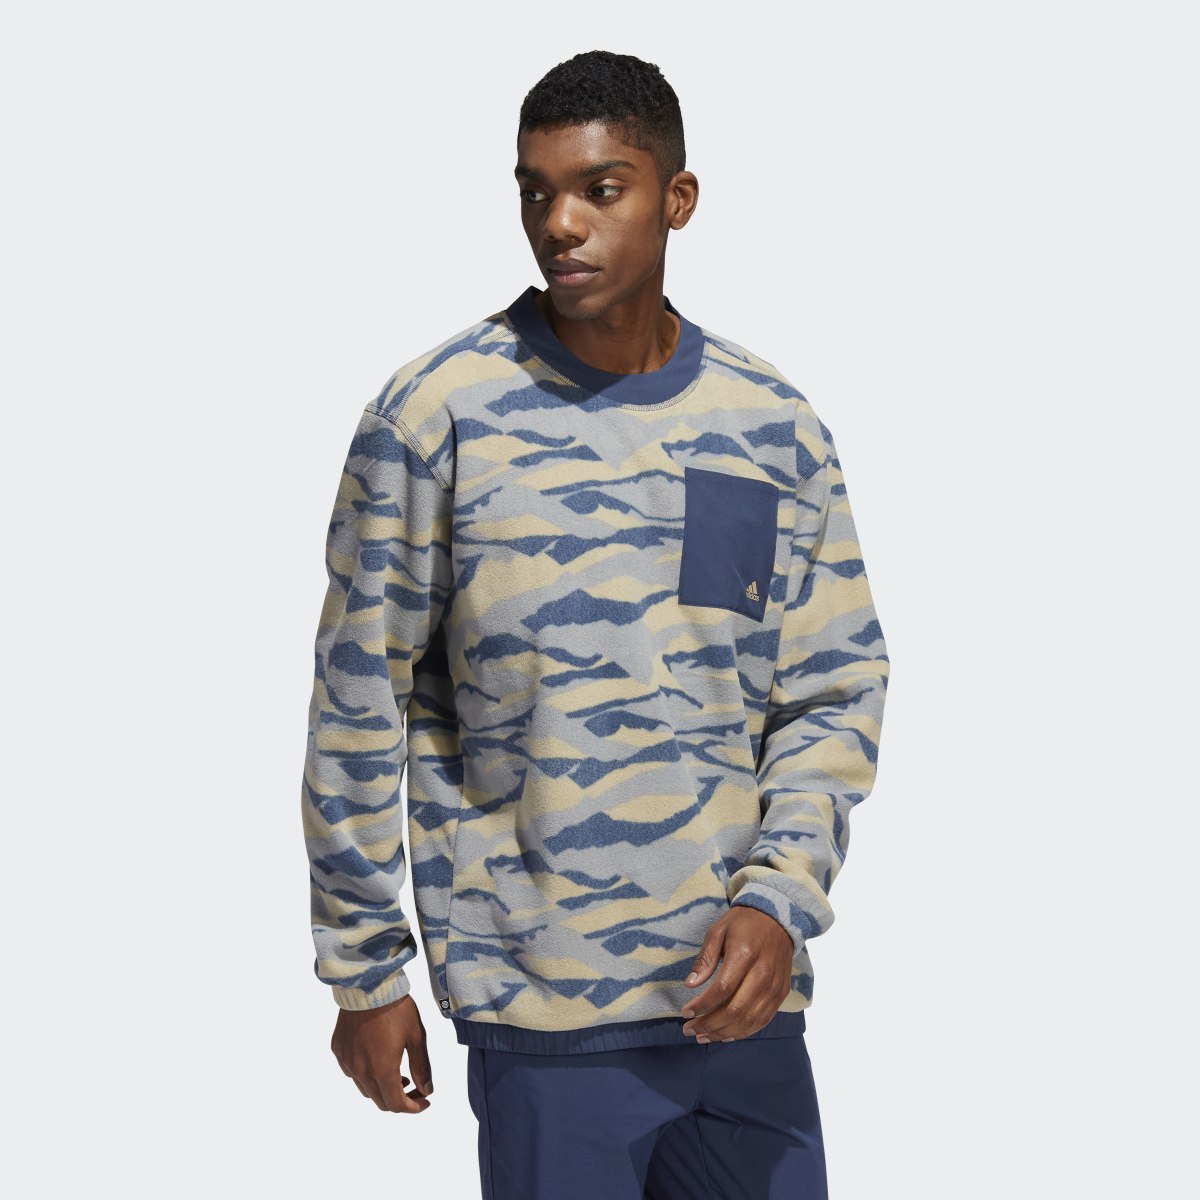 Adidas Texture-Print Sweatshirt. 4